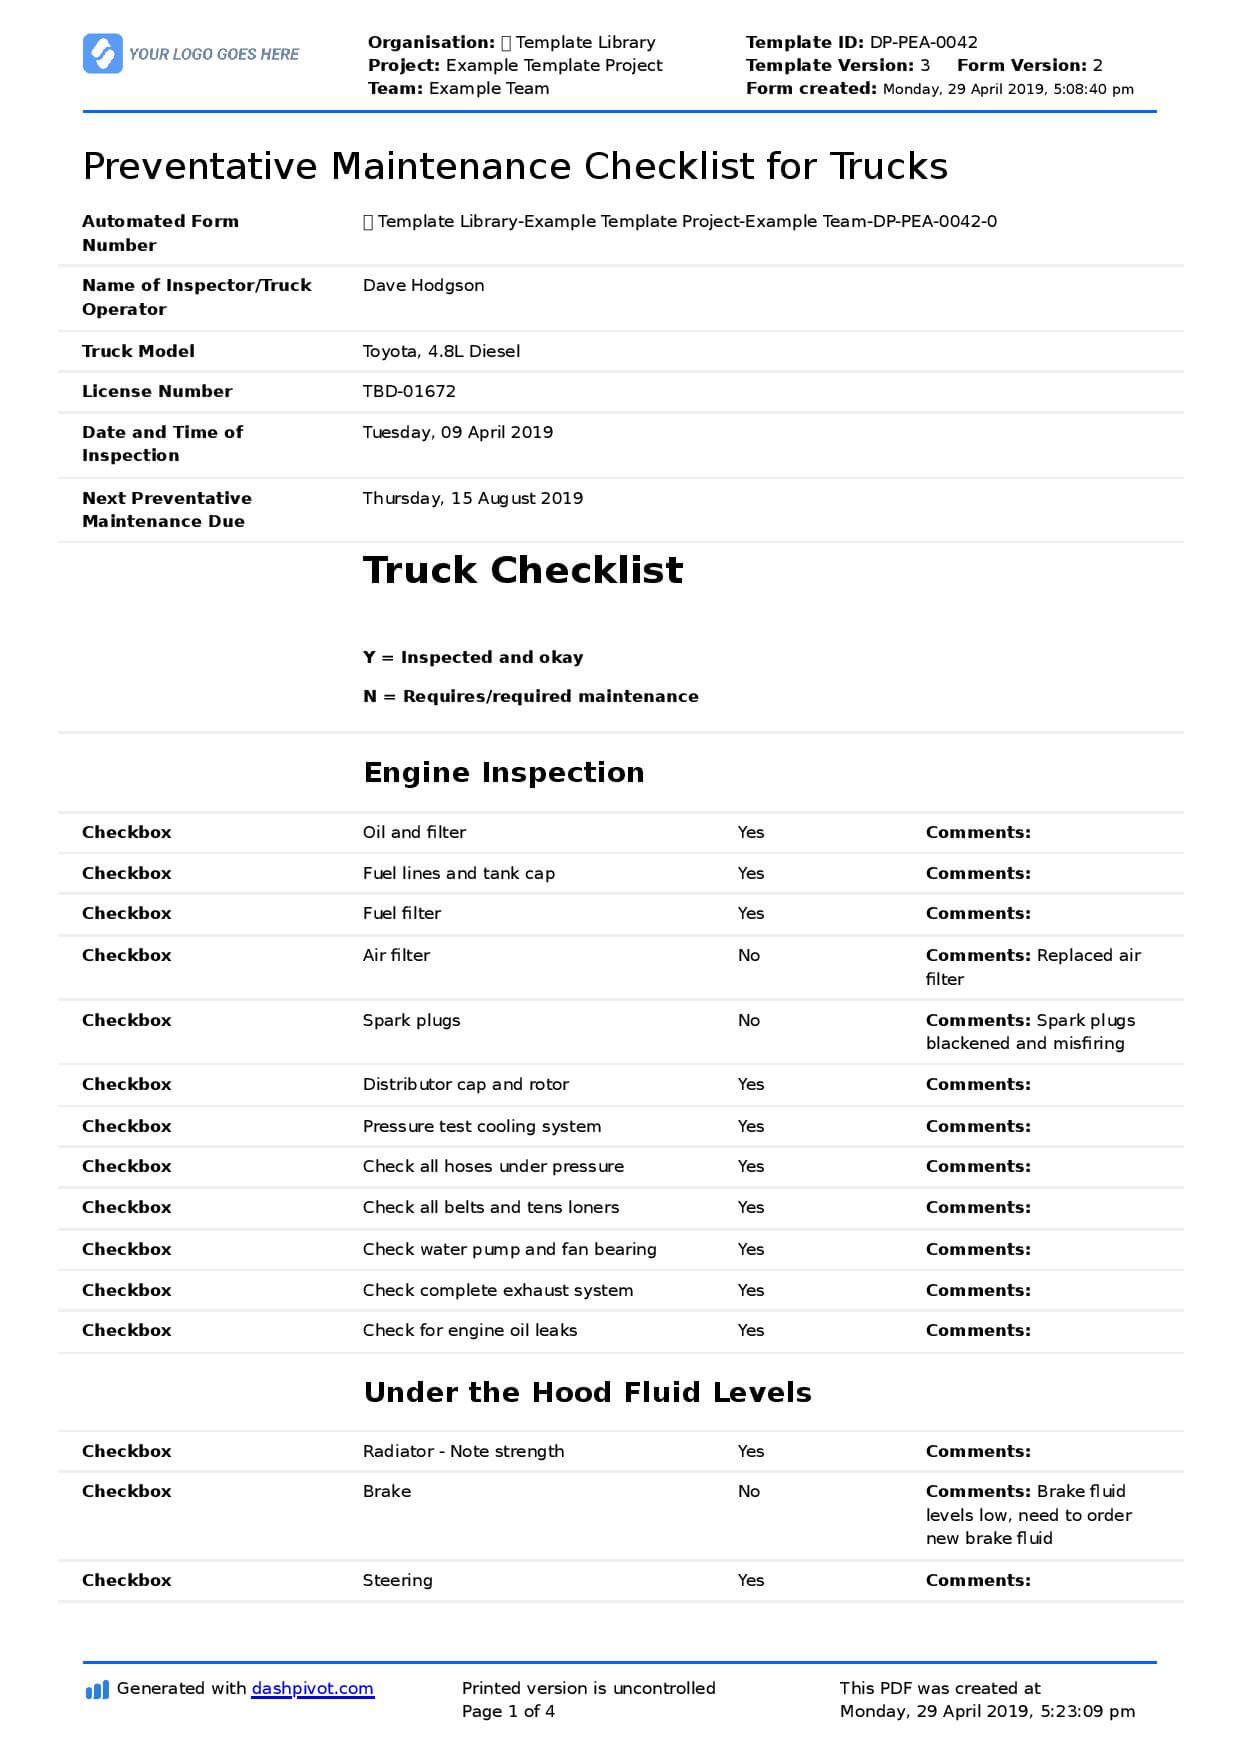 Preventative Maintenance Checklist For Trucks (Diesel Trucks With Computer Maintenance Report Template